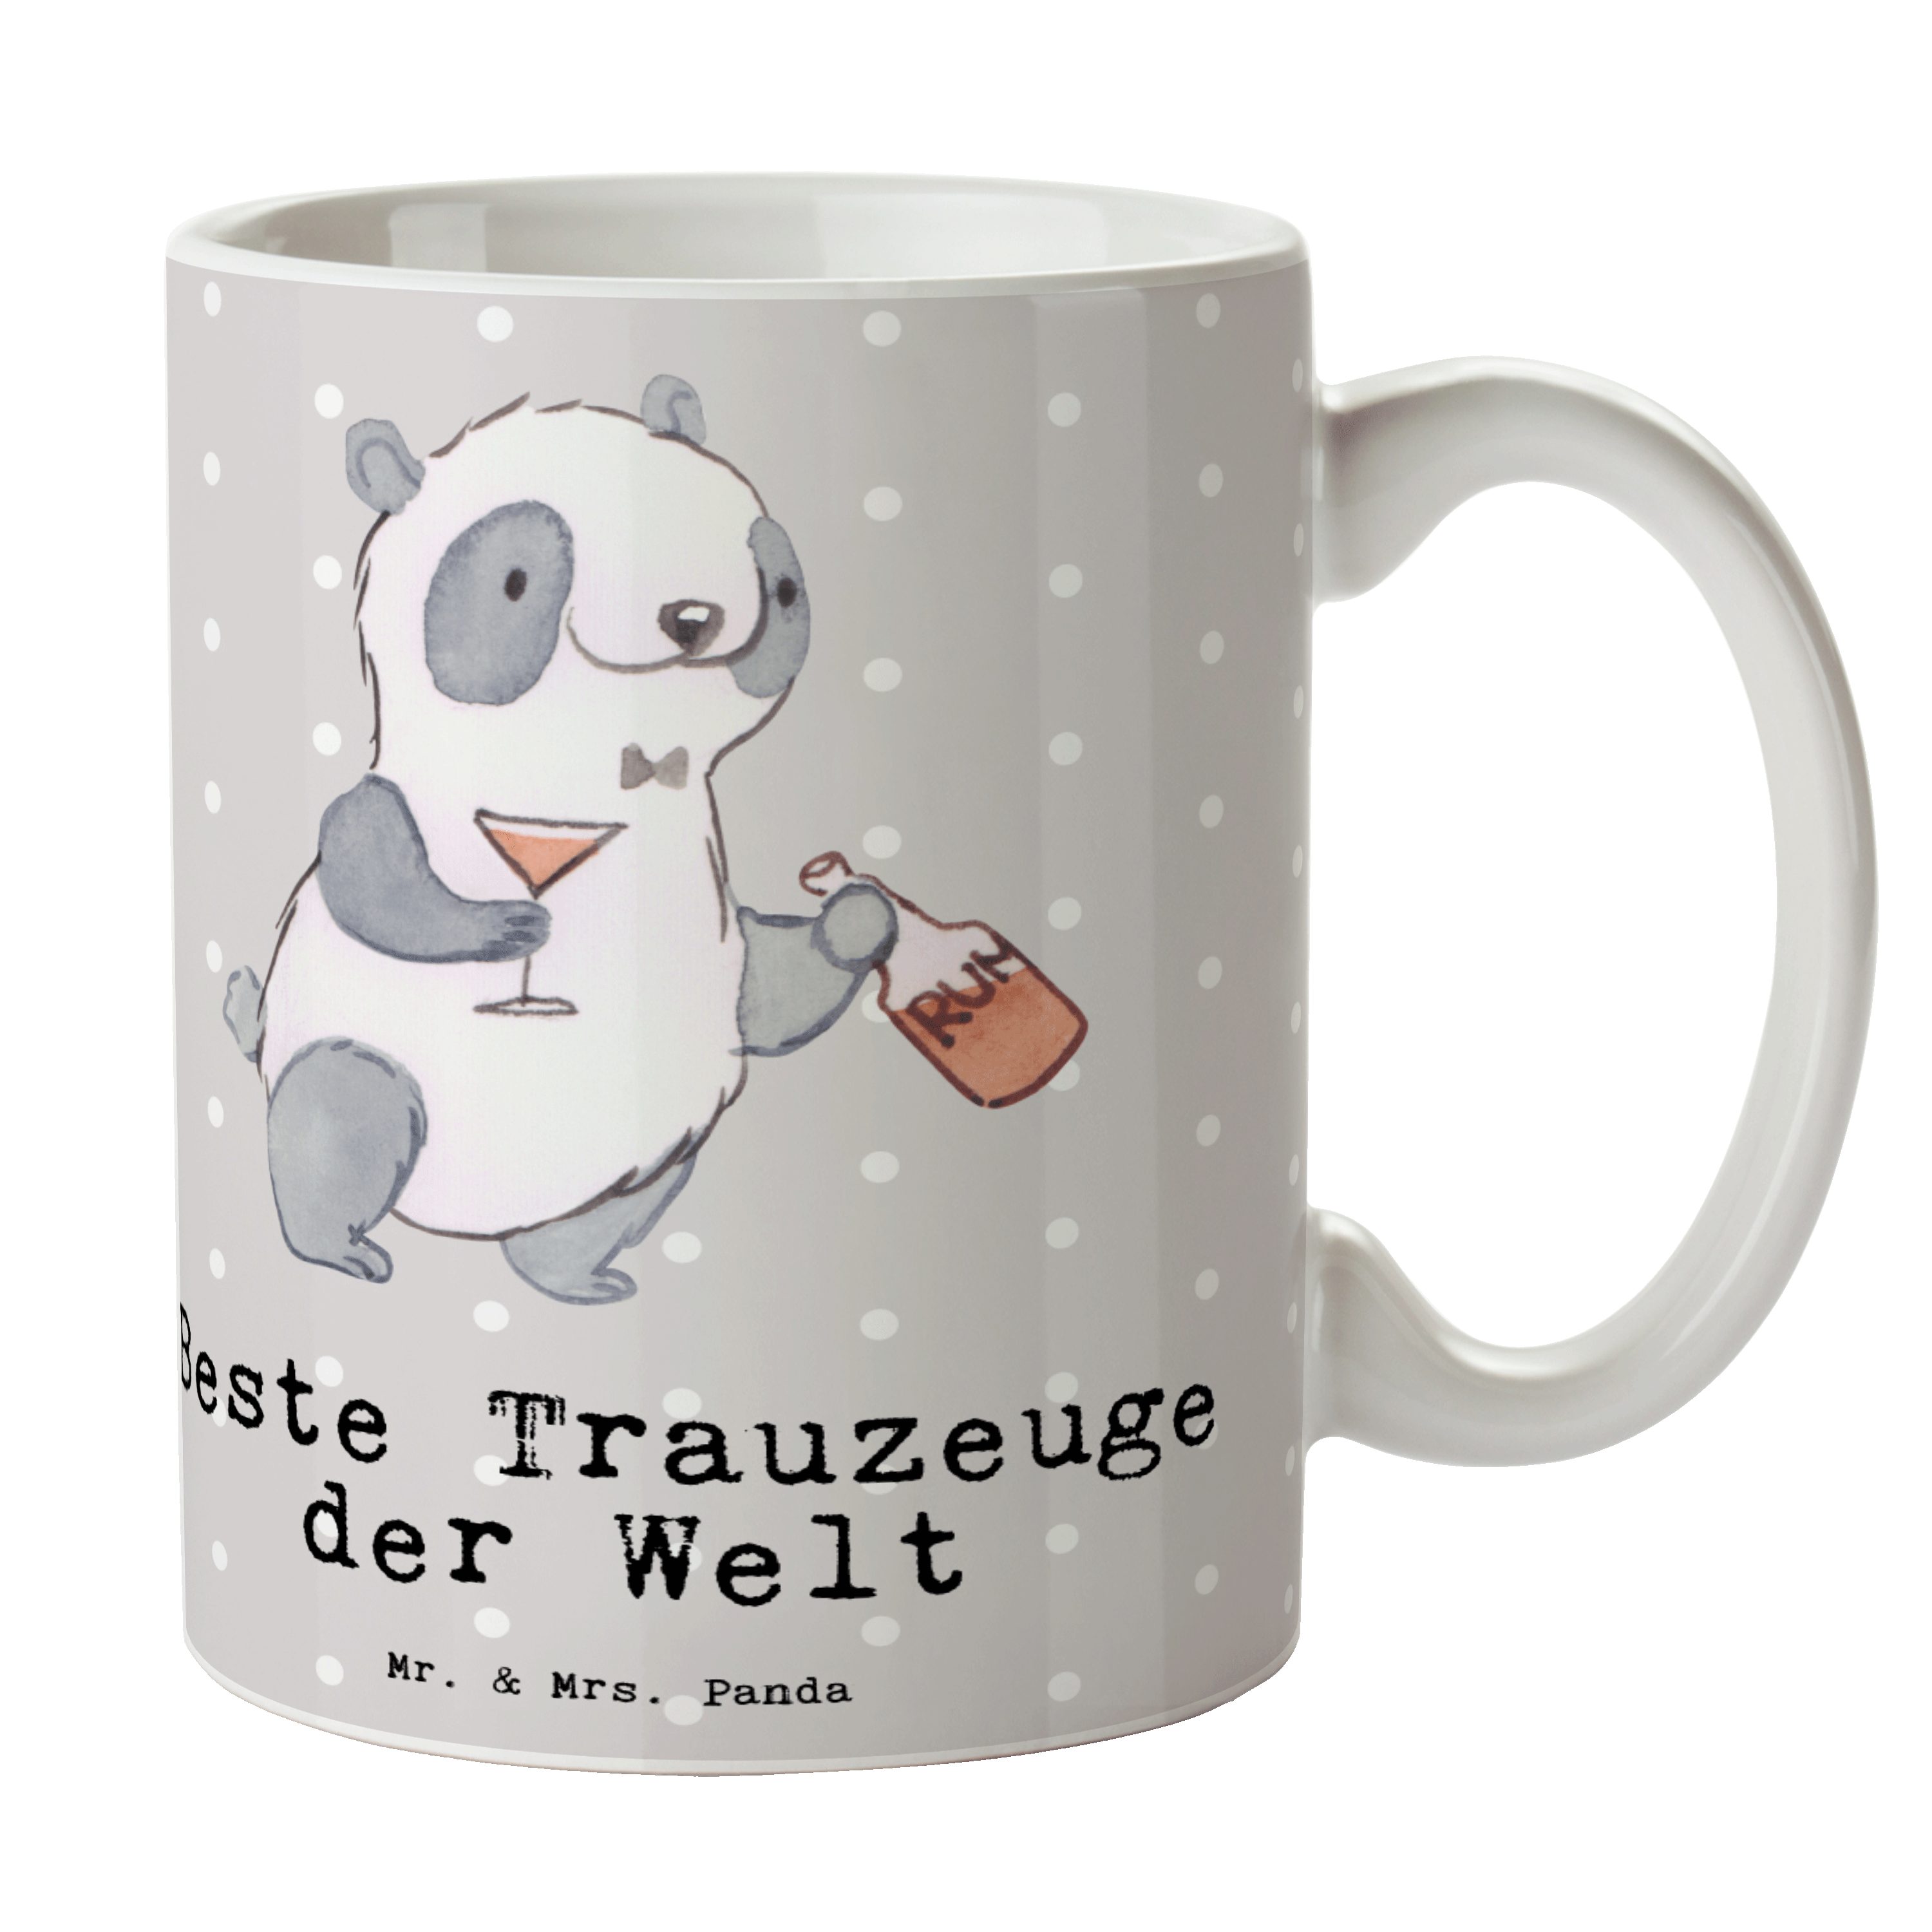 Mr. & Mrs. Panda Tasse Panda Bester Trauzeuge der Welt - Grau Pastell - Geschenk, Geschenk T, Keramik